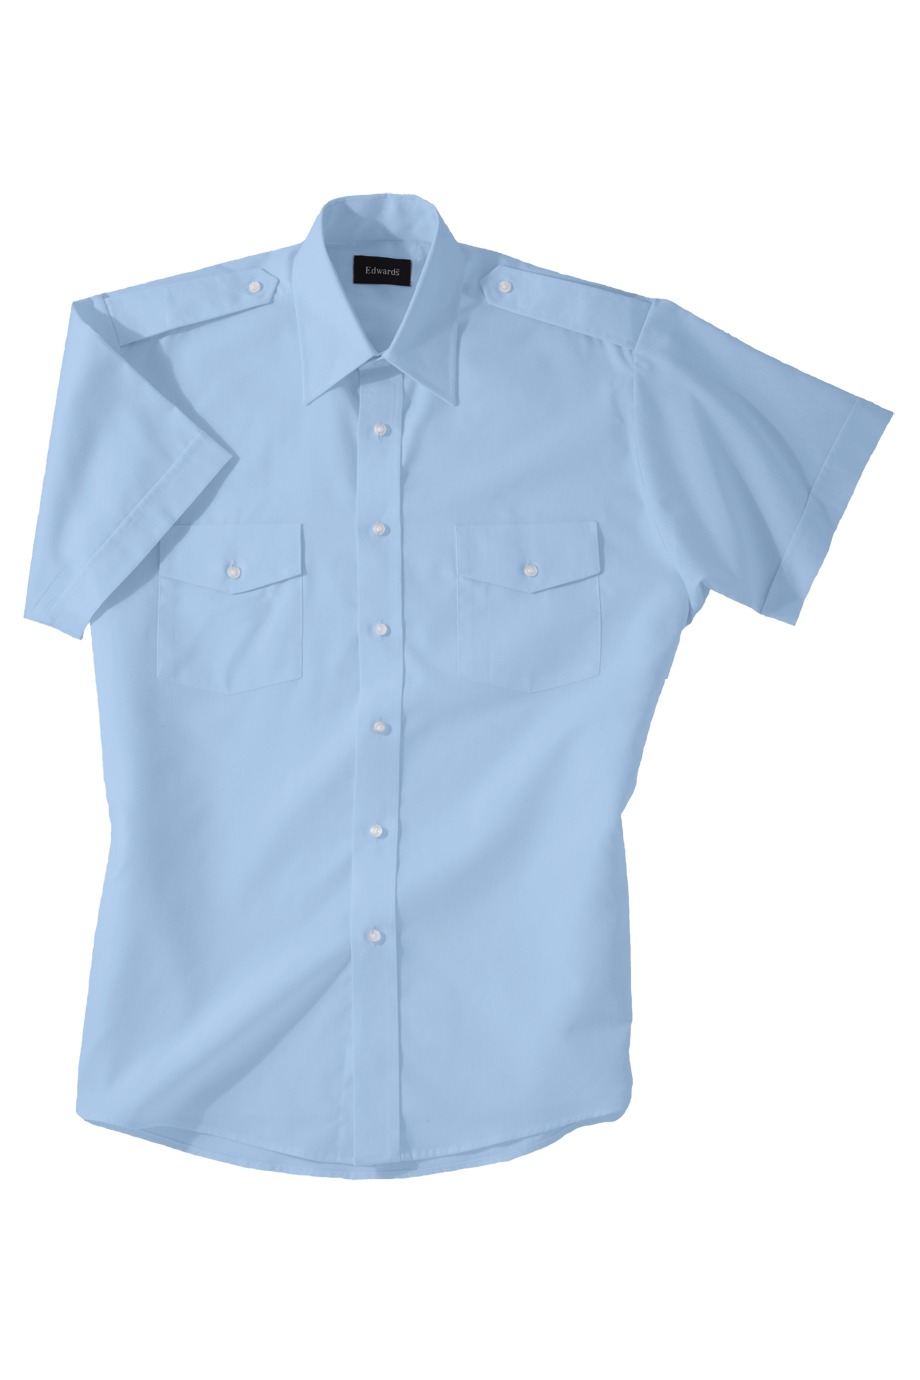 Edwards Garment 1212 - Men's Short Sleeve Navigator Shirt